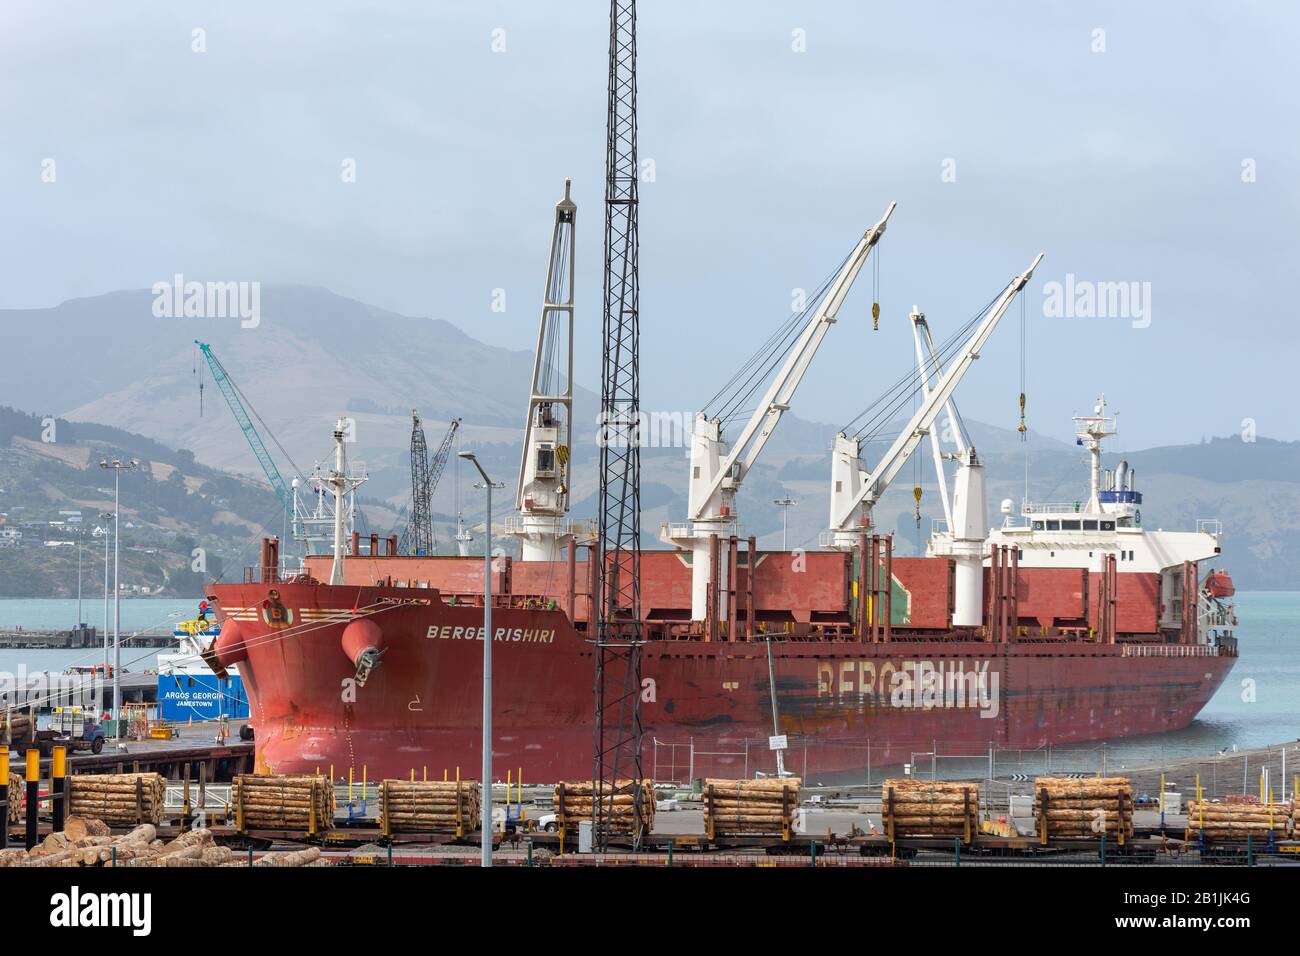 'Berge Rishiri' bulk carrier vessel berthed in Lyttelton, Lyttelton Harbour, Banks Peninsula, Canterbury Region, New Zealand Stock Photo